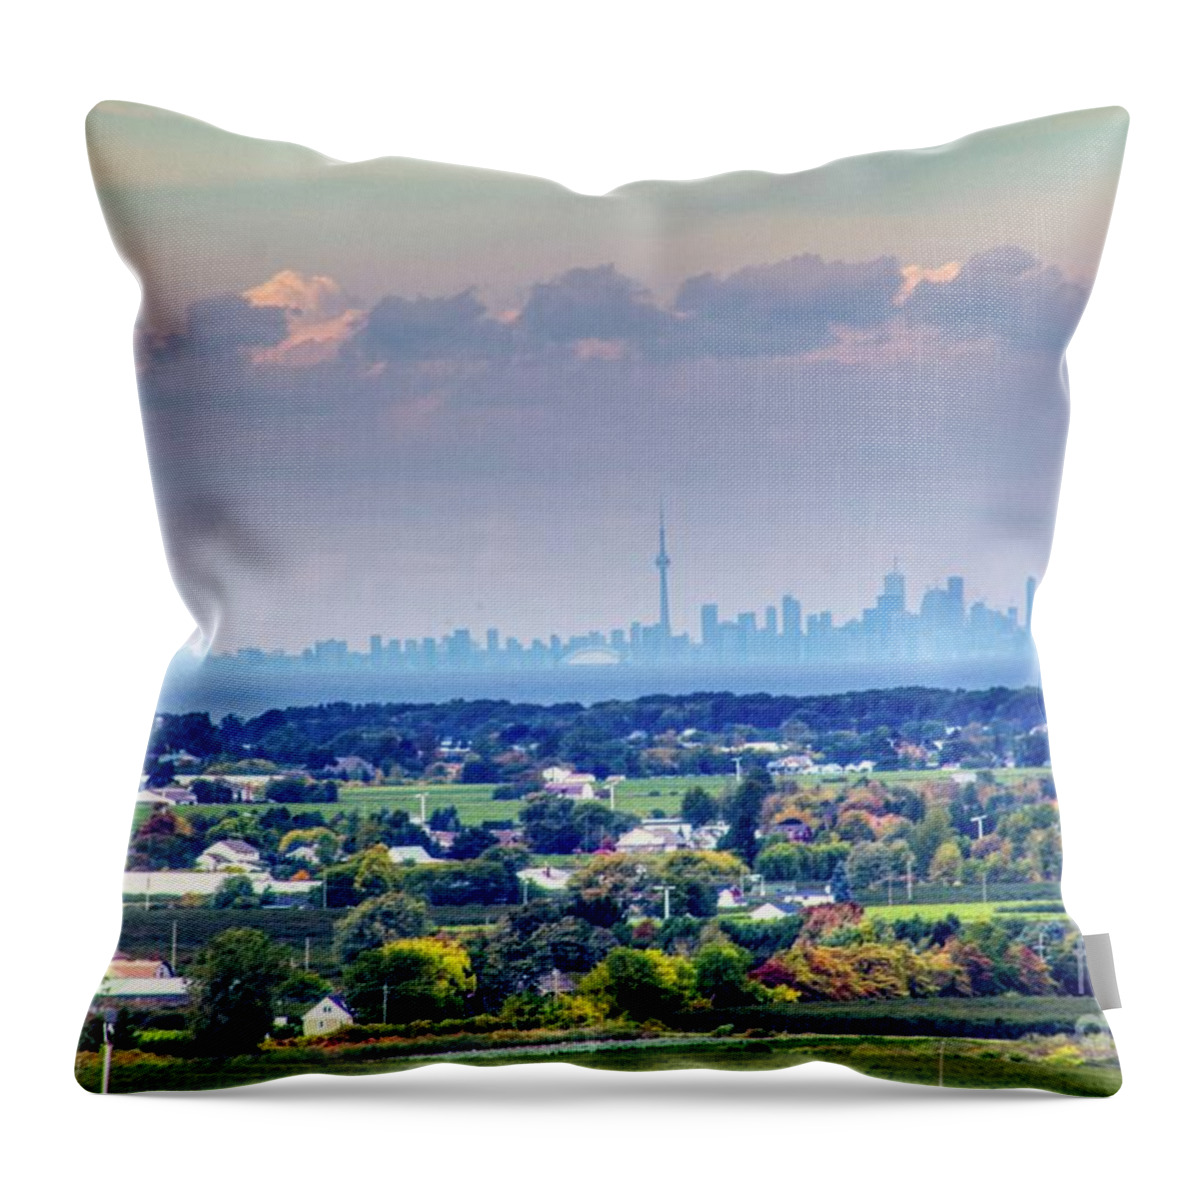 #toronto #ontario #canada #niagaracanada #lovetoronto #fantastic_earth #earthpix #explorecanada #iloveny #usa #view #skyline #hdr #highdynamicrange #skylum #aurorahdr2019 #jaw_dropping_shots #picoftheday #imageoftheday #travel #scenic #cntower #torontoskyline Throw Pillow featuring the photograph The Toronto skyline by Jim Lepard